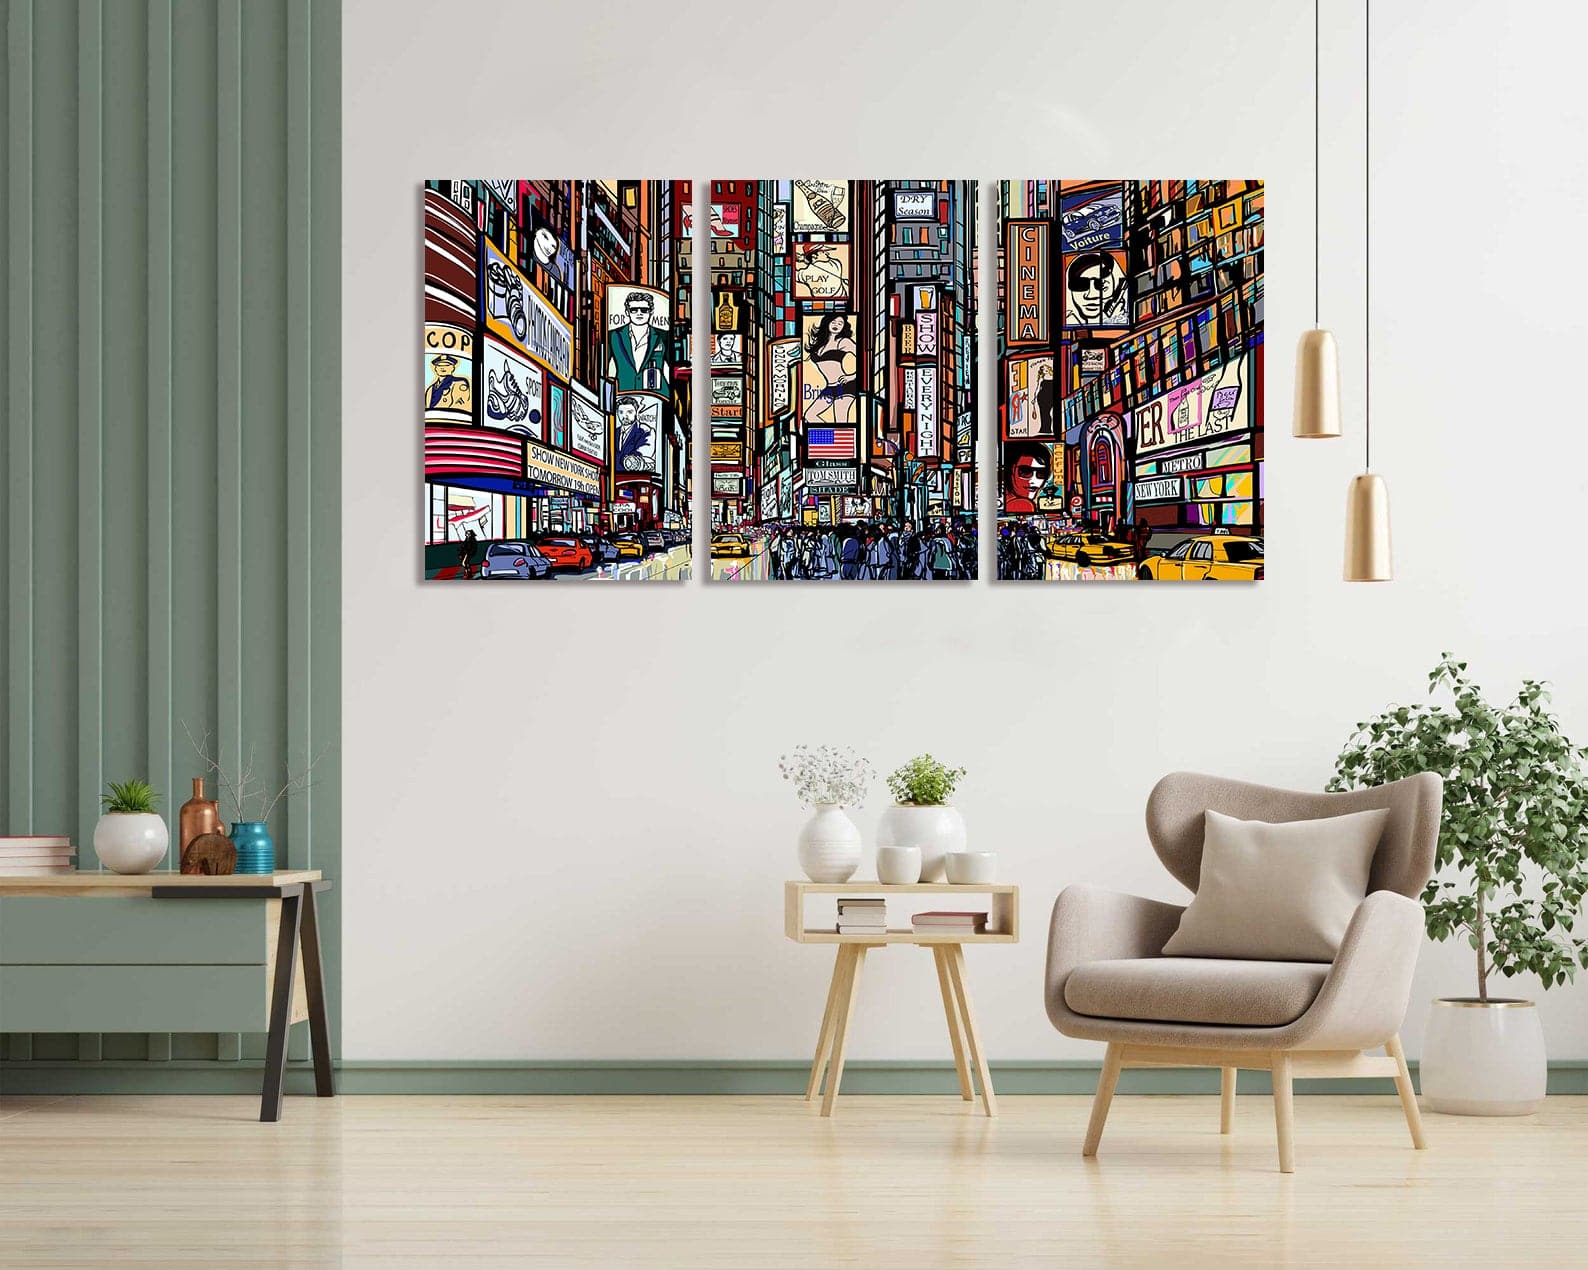 Framed Mutipul Panels - New York City